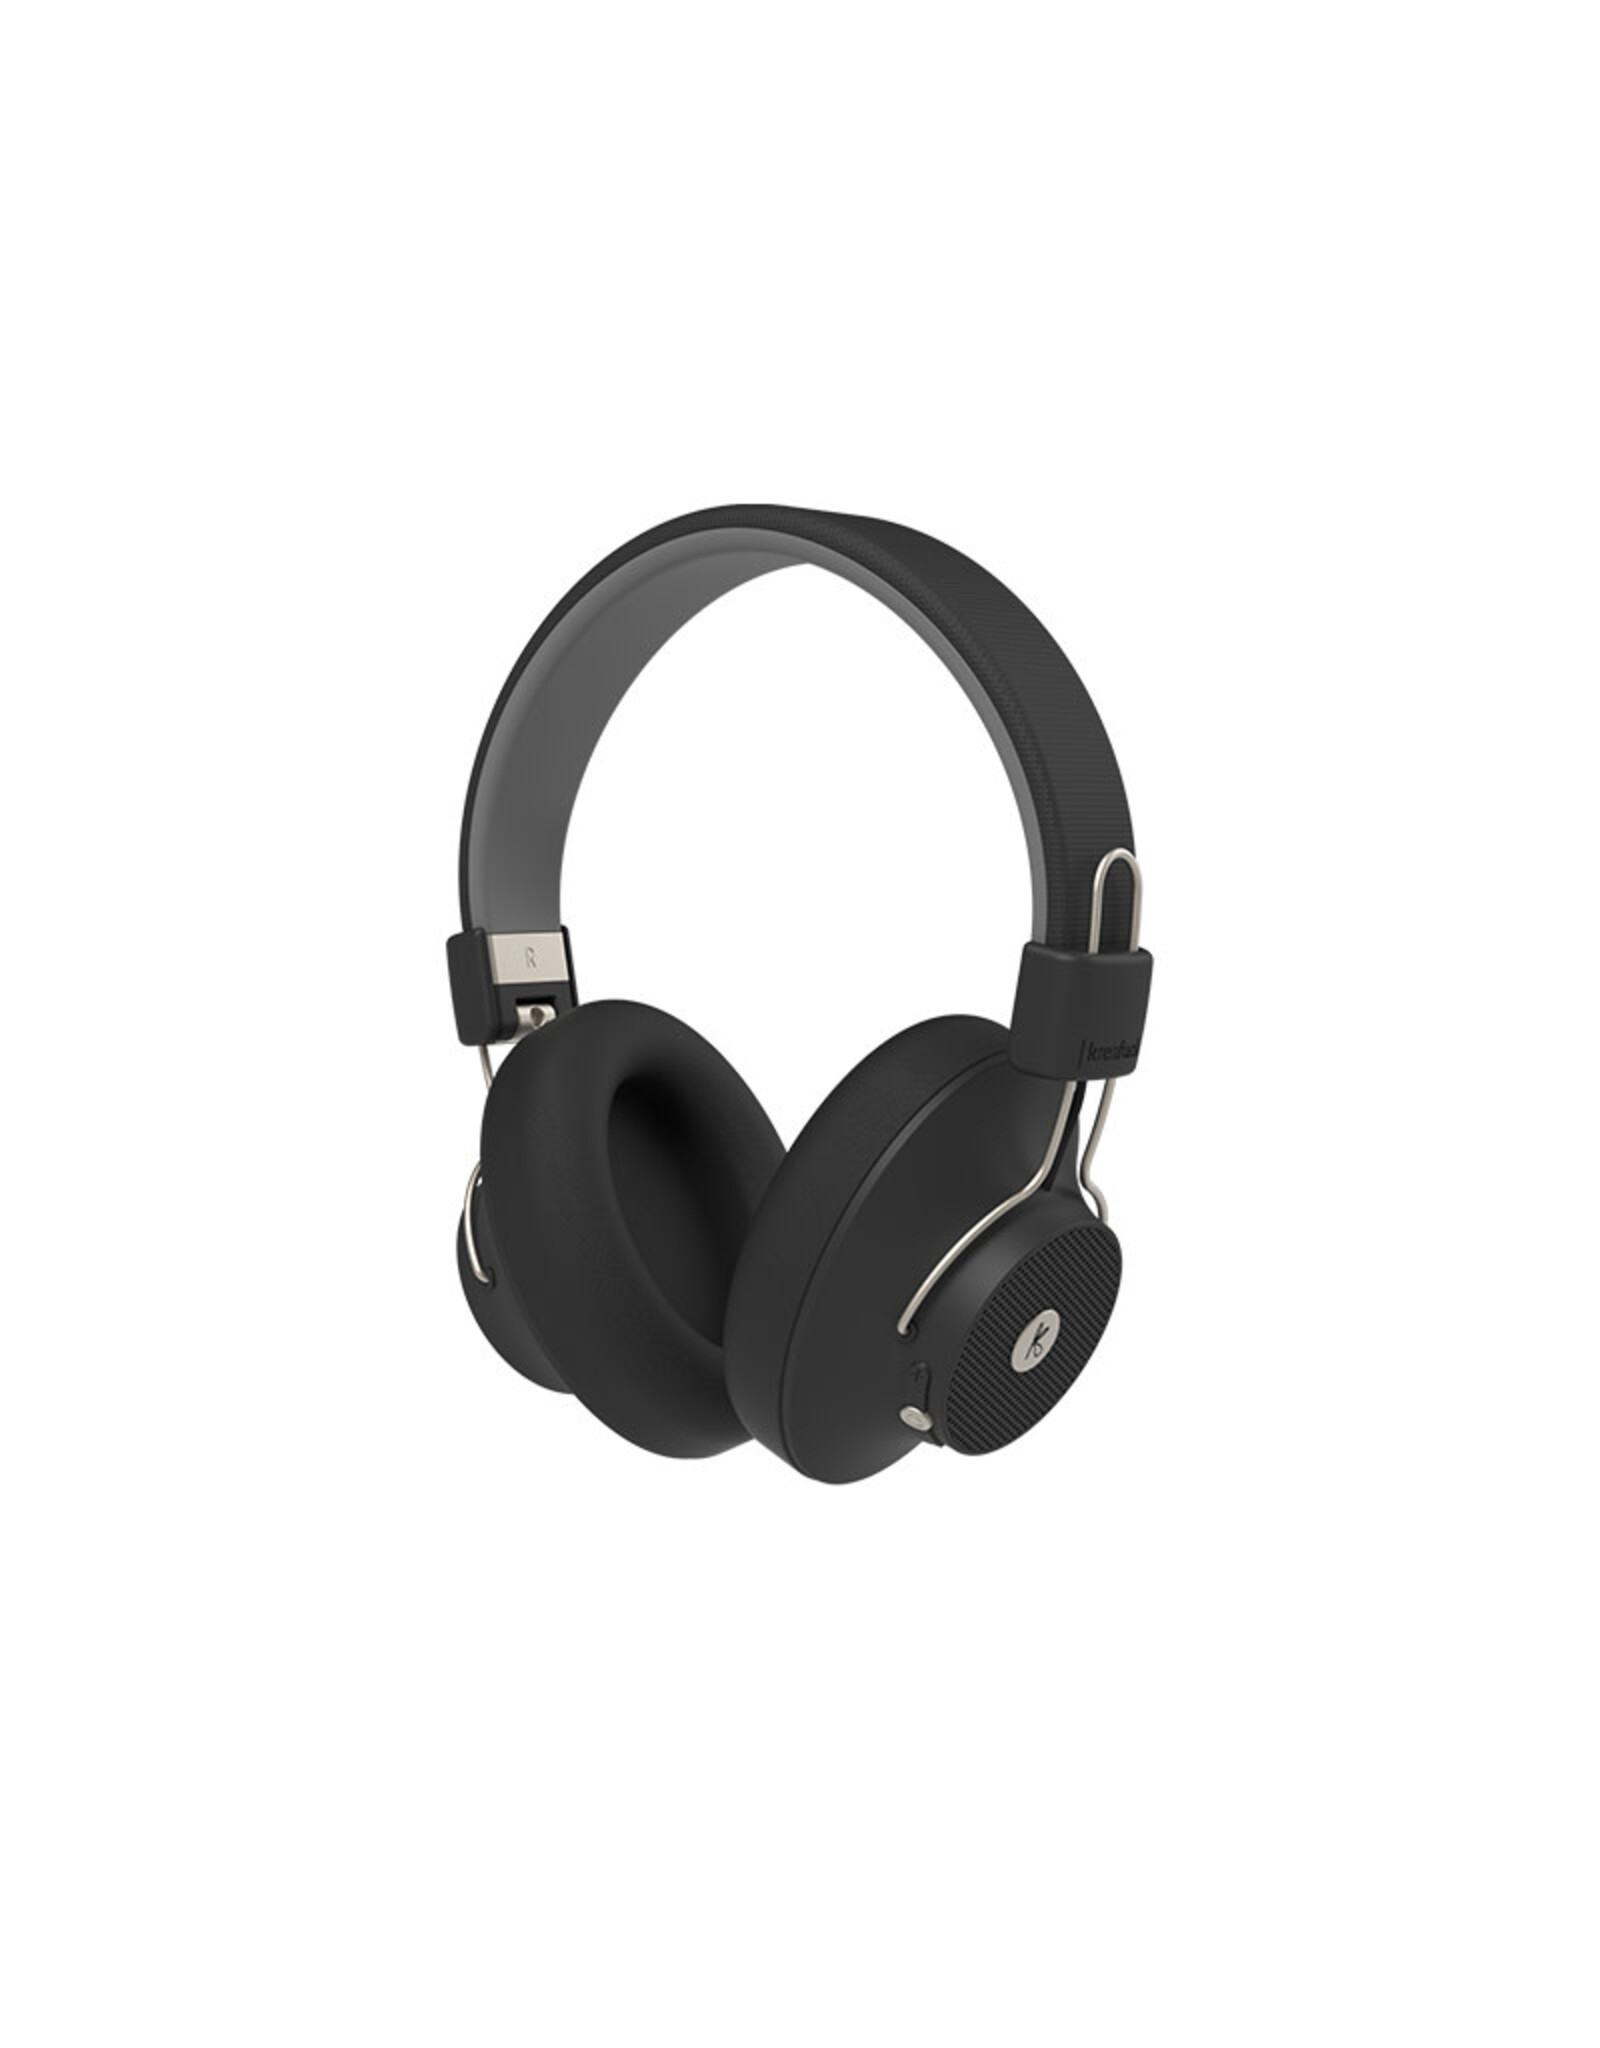 Kreafunk aBeat Bluetooth Headphones - Black QI